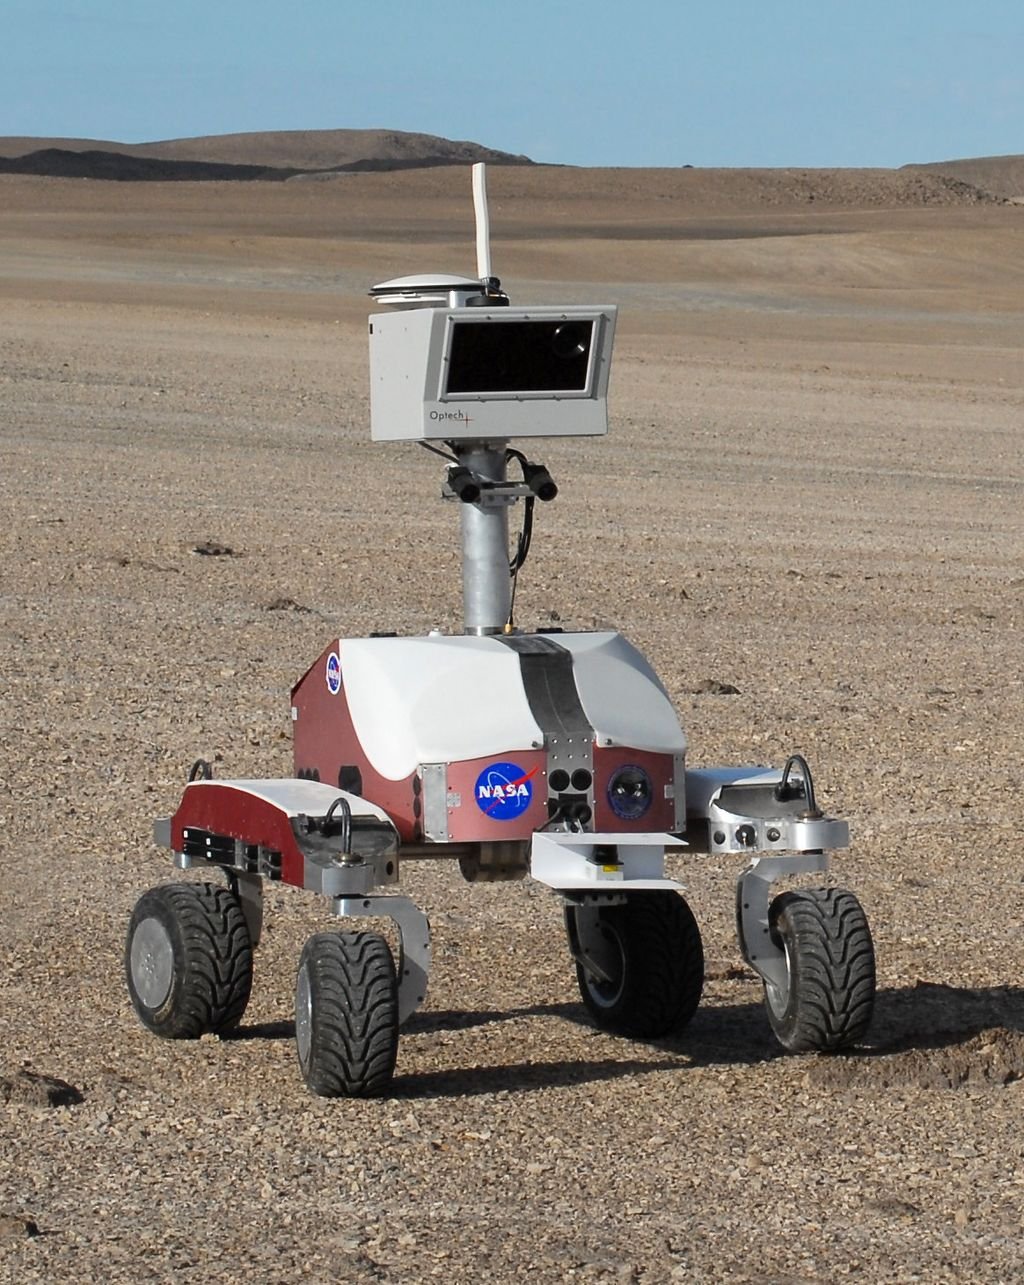 Robot in a desert landscape